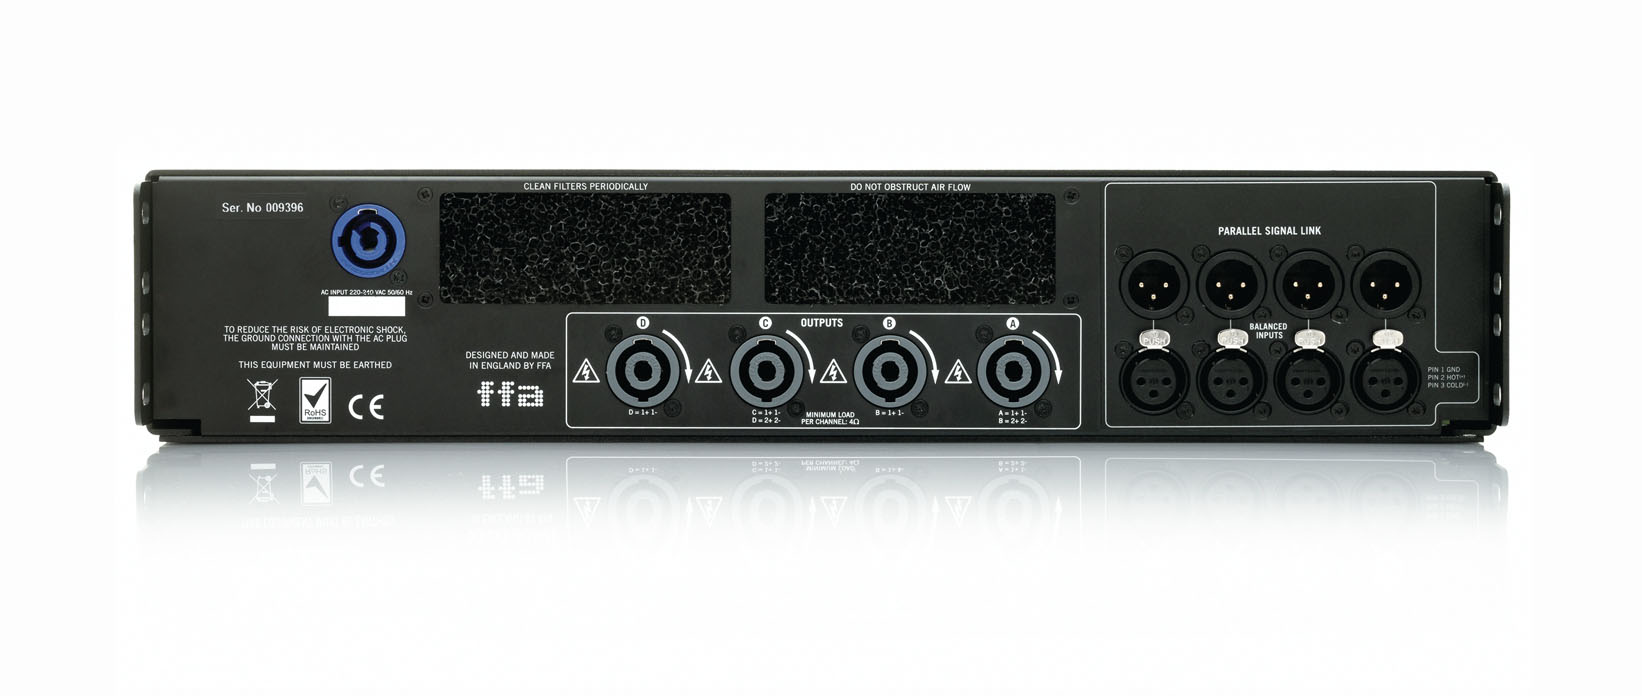 FFA-2004 Product Image